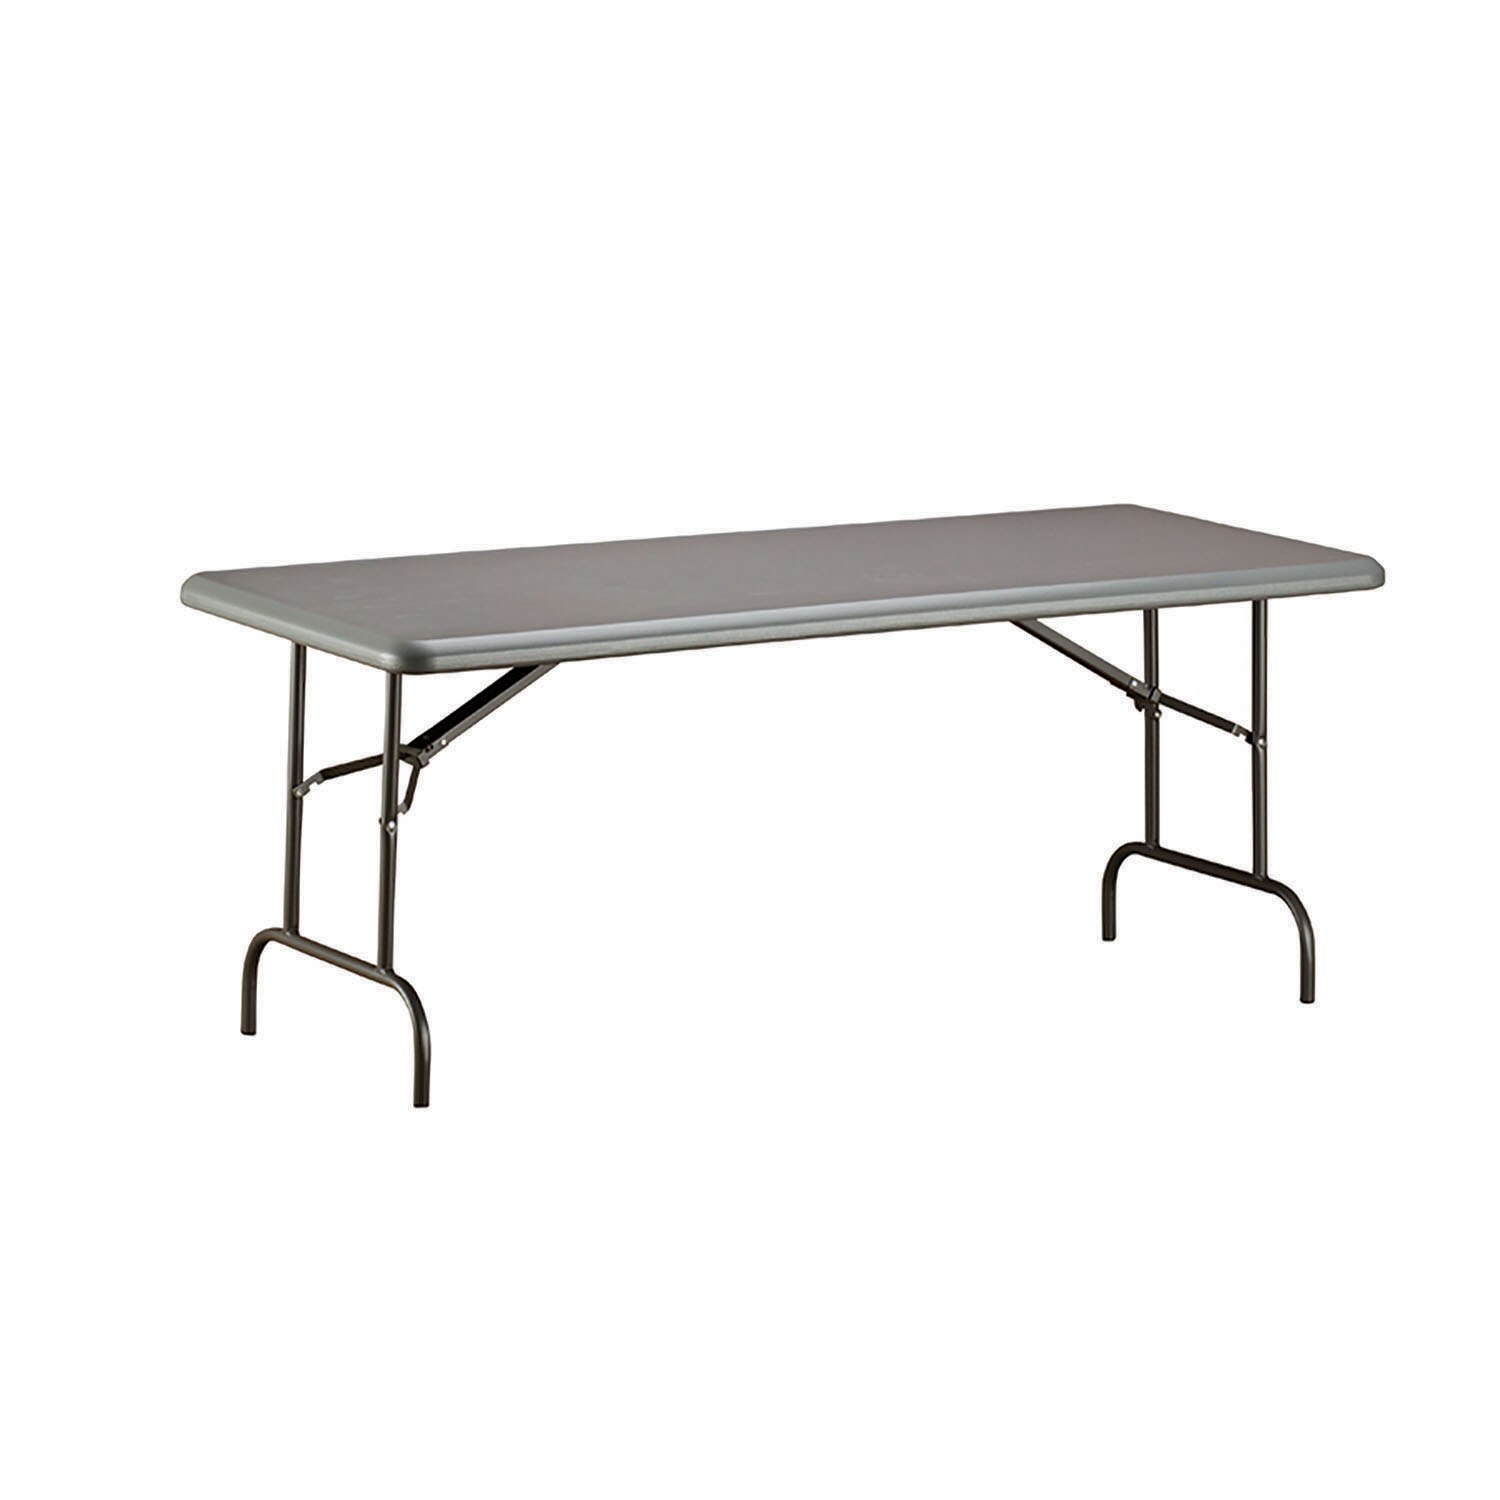 Folding Table with Heavy Duty Legs, 72" x 30"